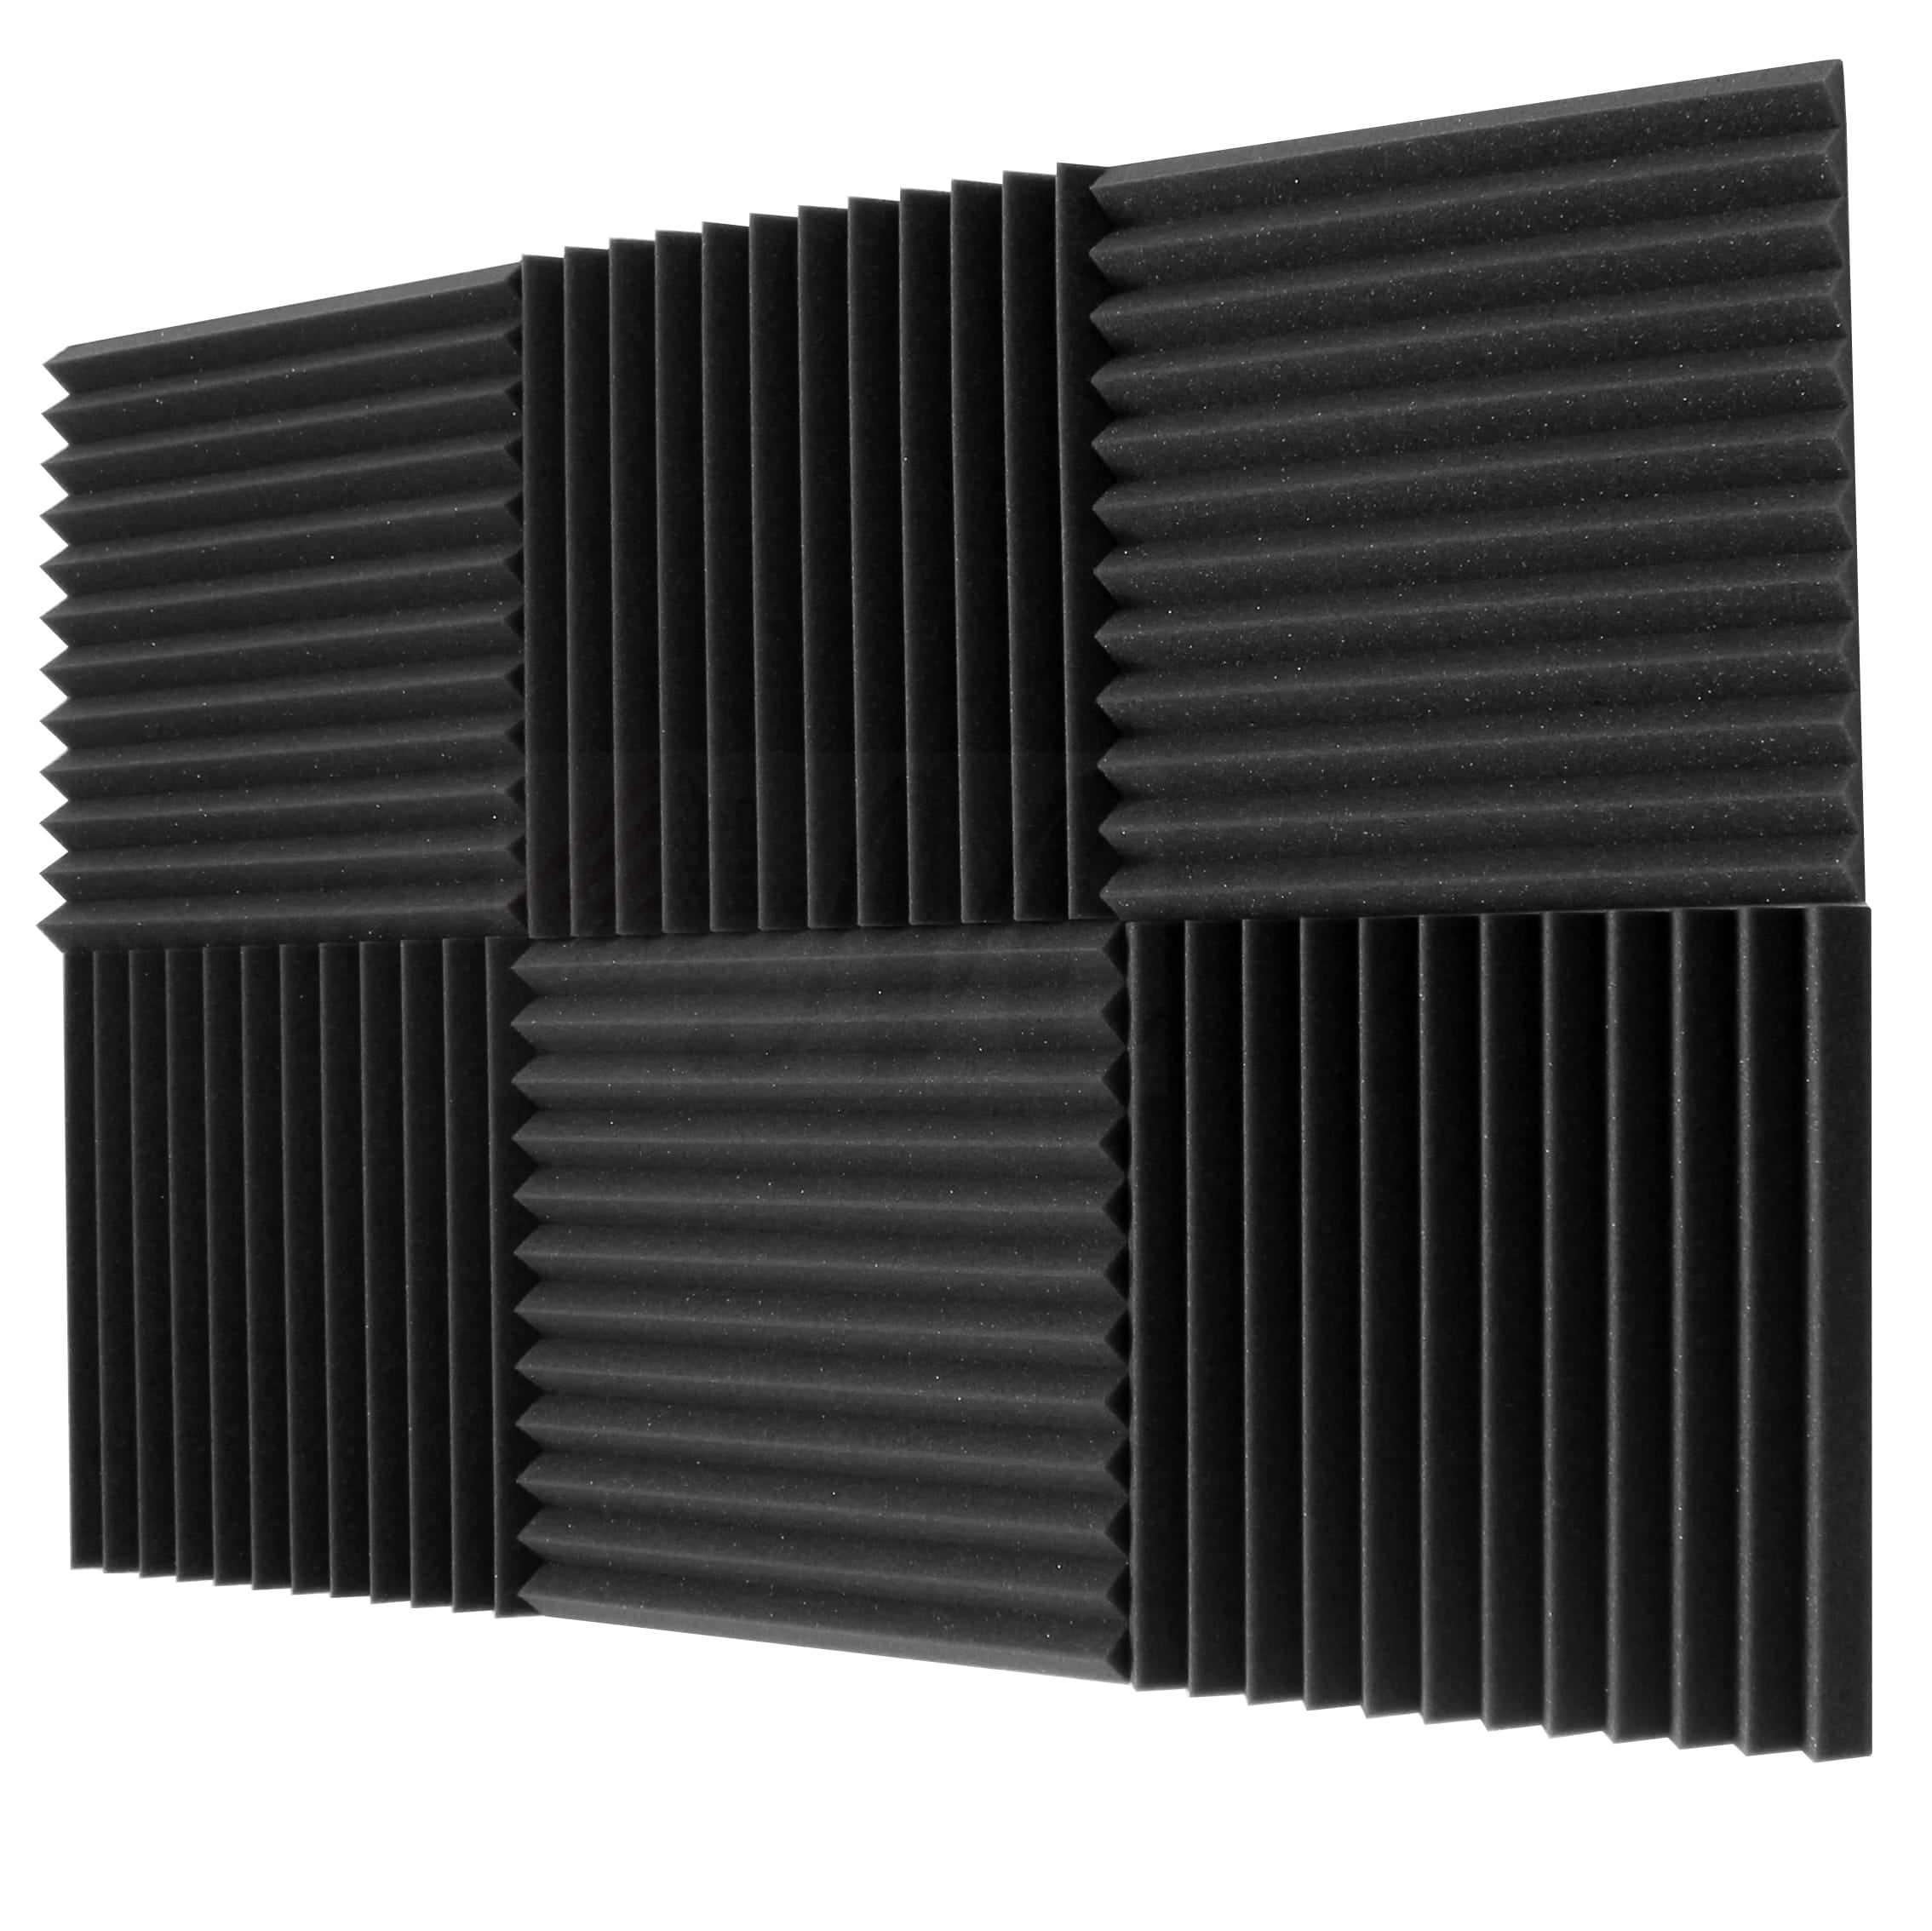 Soundproof Wedges Charcoal Acoustic Foam 12 Pack Acoustic Panels 1 X 12 X 12 Inches Studio Foam Wedges High Density Panels 